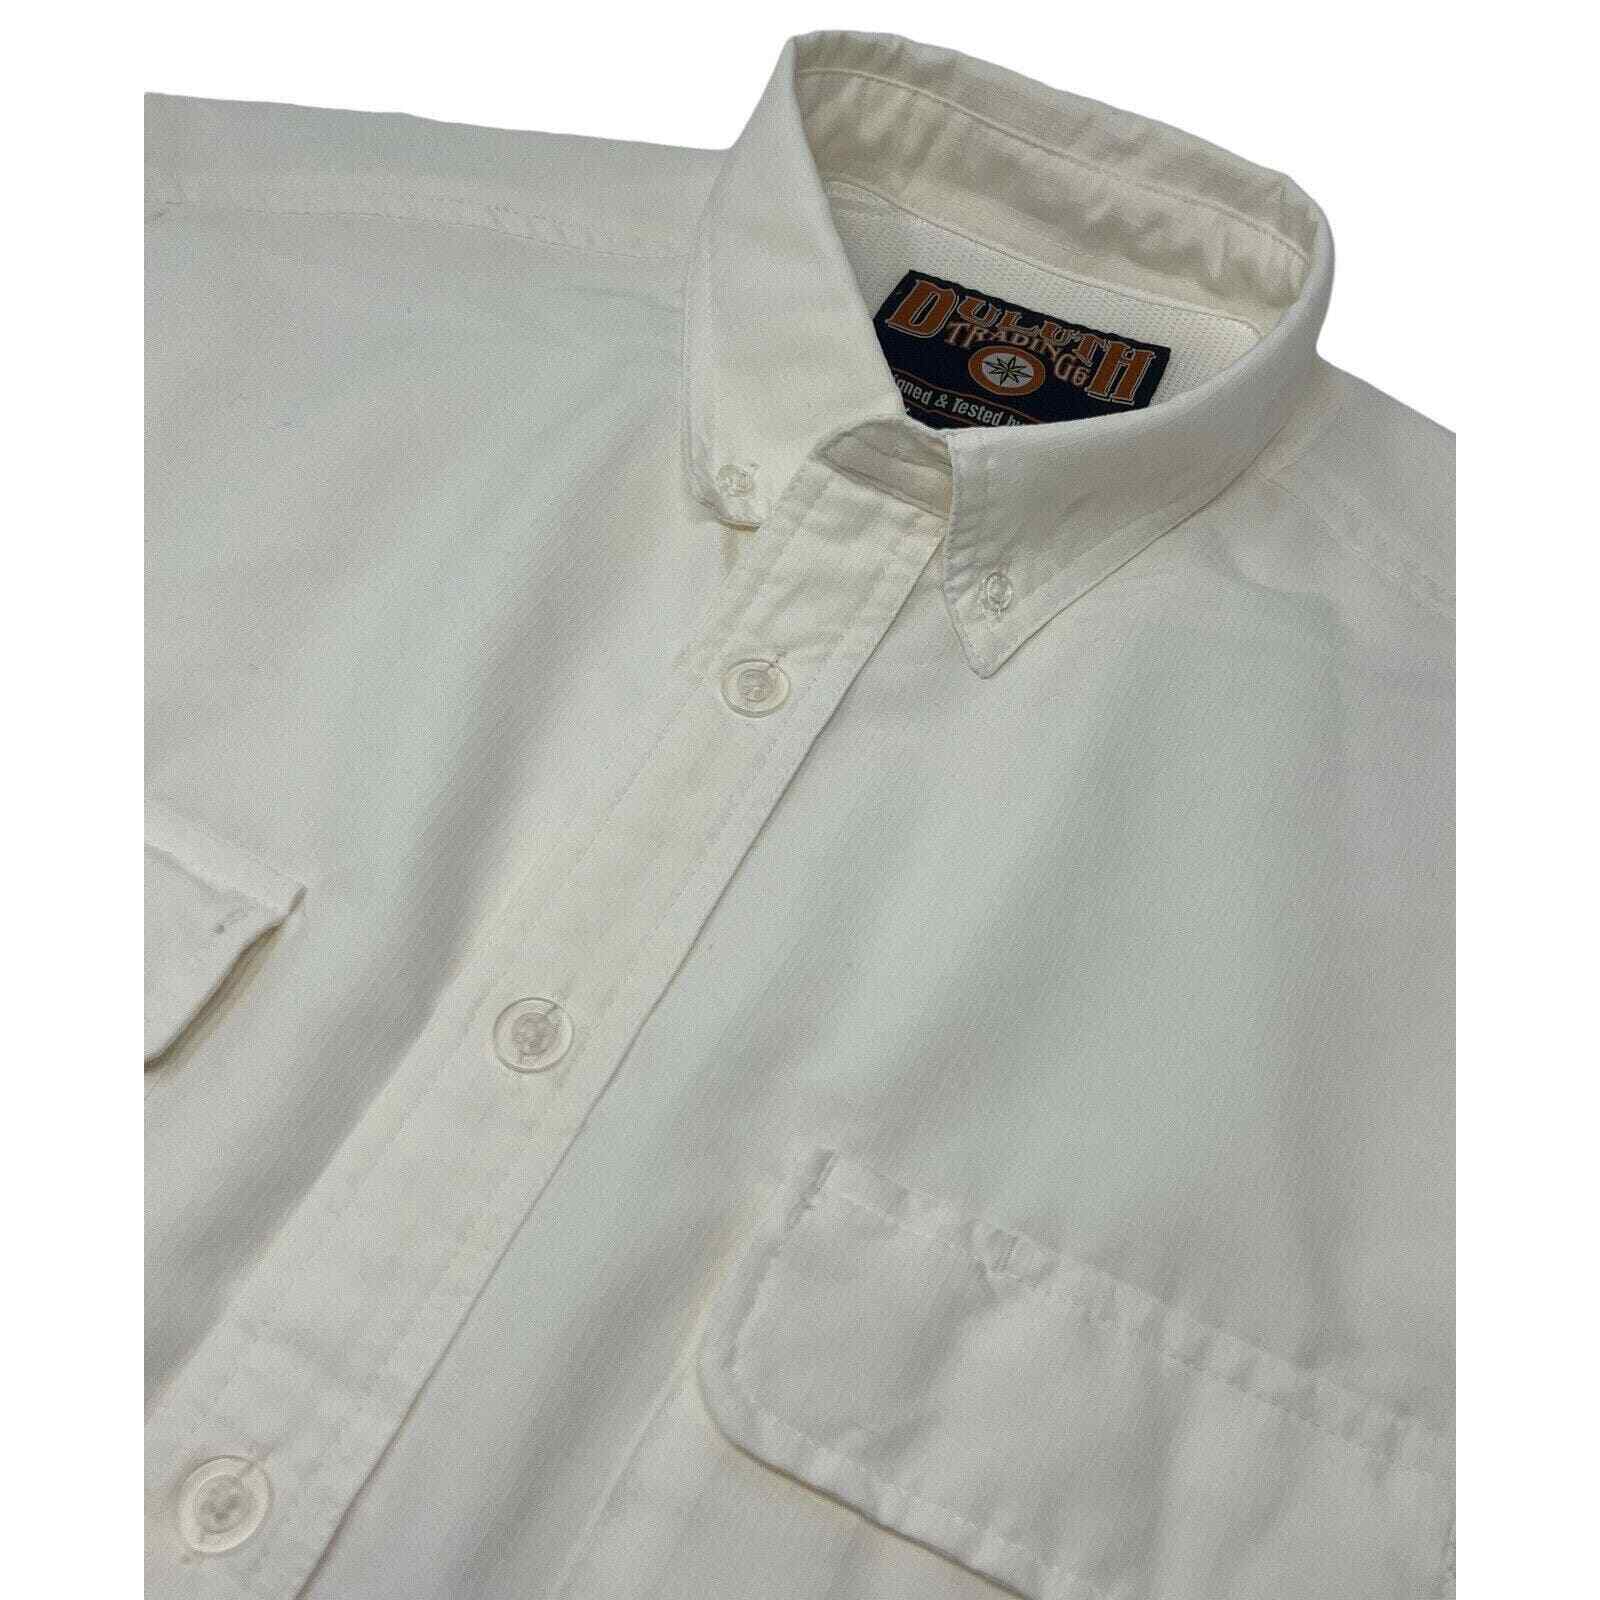 Duluth Trading Co Men’s Fishing Shirt Large Tall Long Sleeve White Shirt Pockets